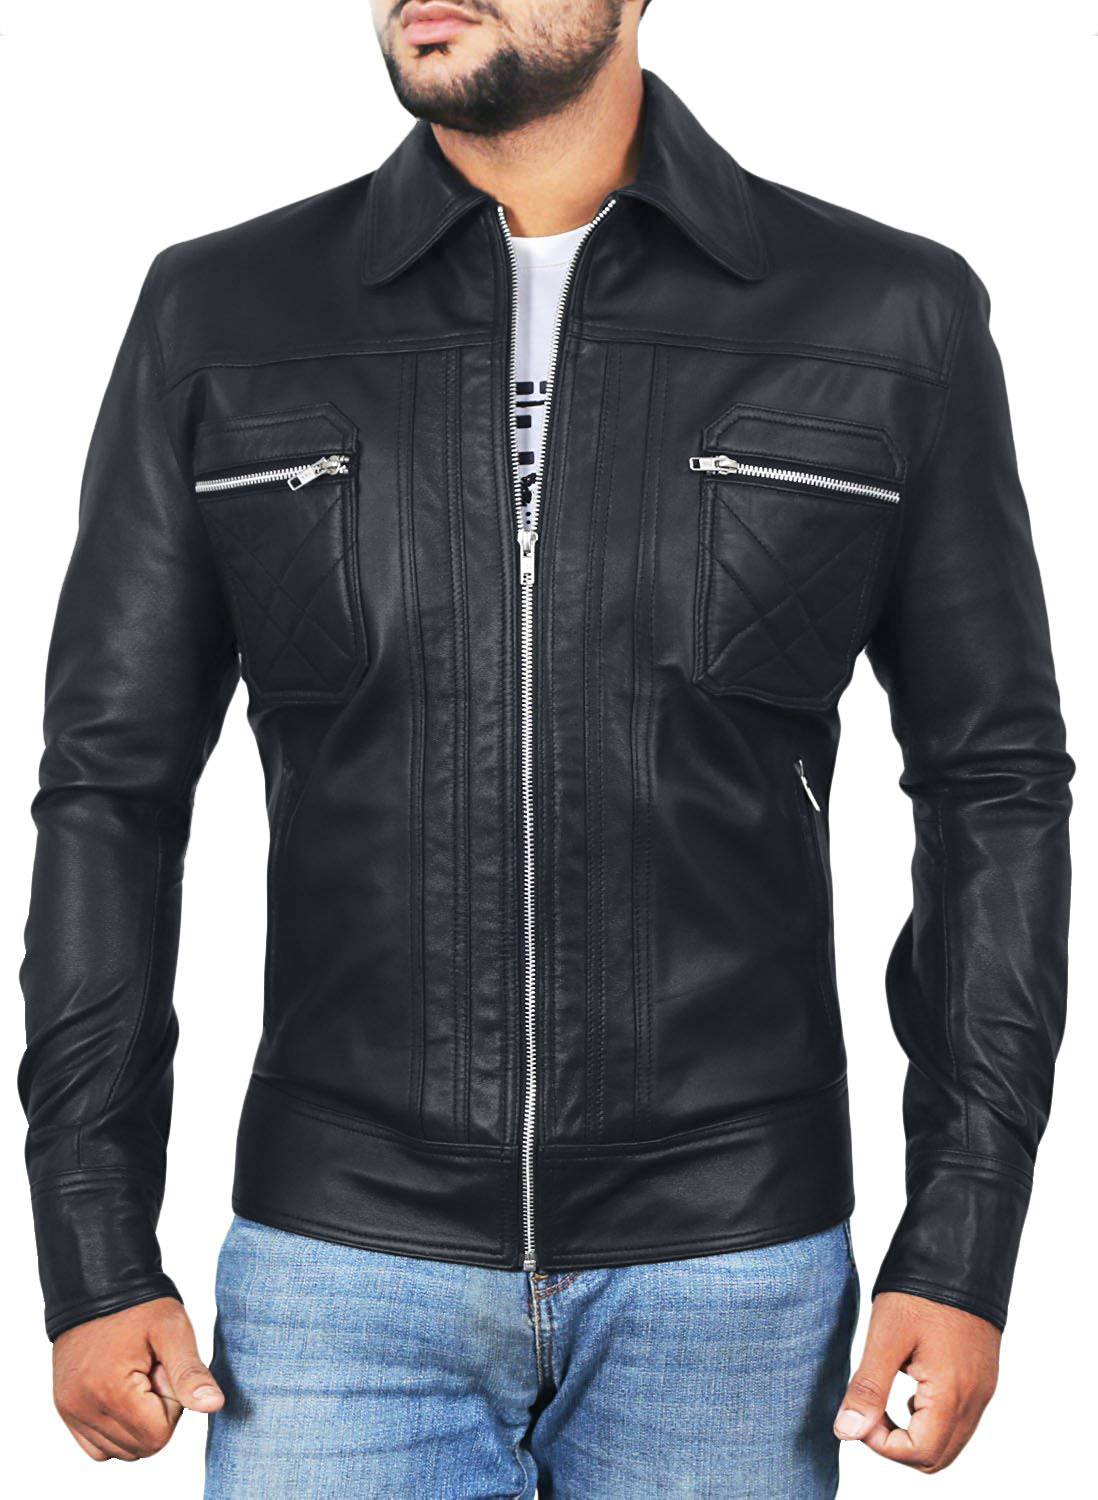 Leather Jackets Hub Mens Genuine Lambskin Leather Jacket (Black, Classic Jacket) - 1501153